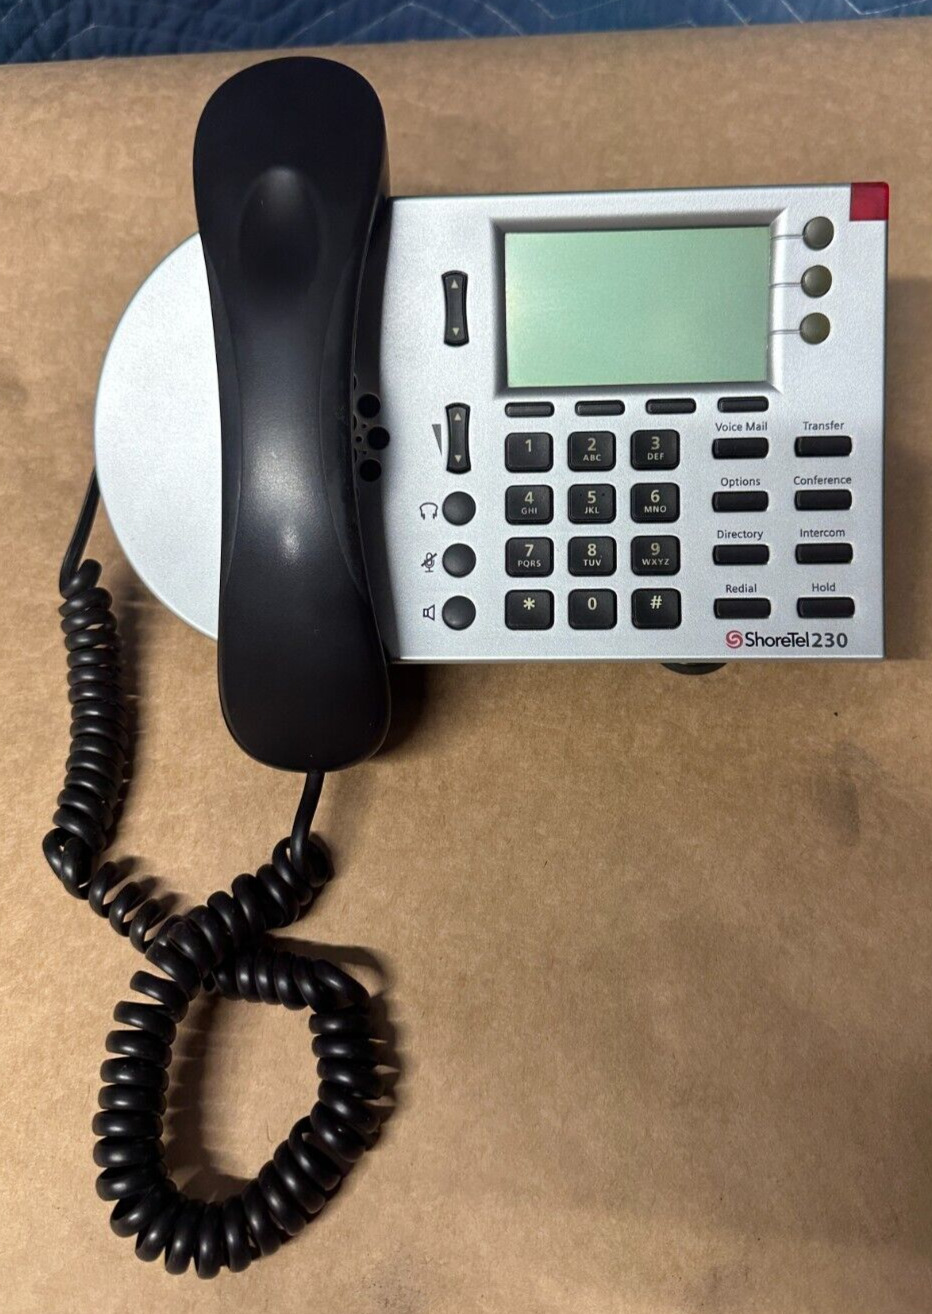 Lot of 32 Shortel 230 VoIP Business Office Speaker Phone IP Display Phone Silver